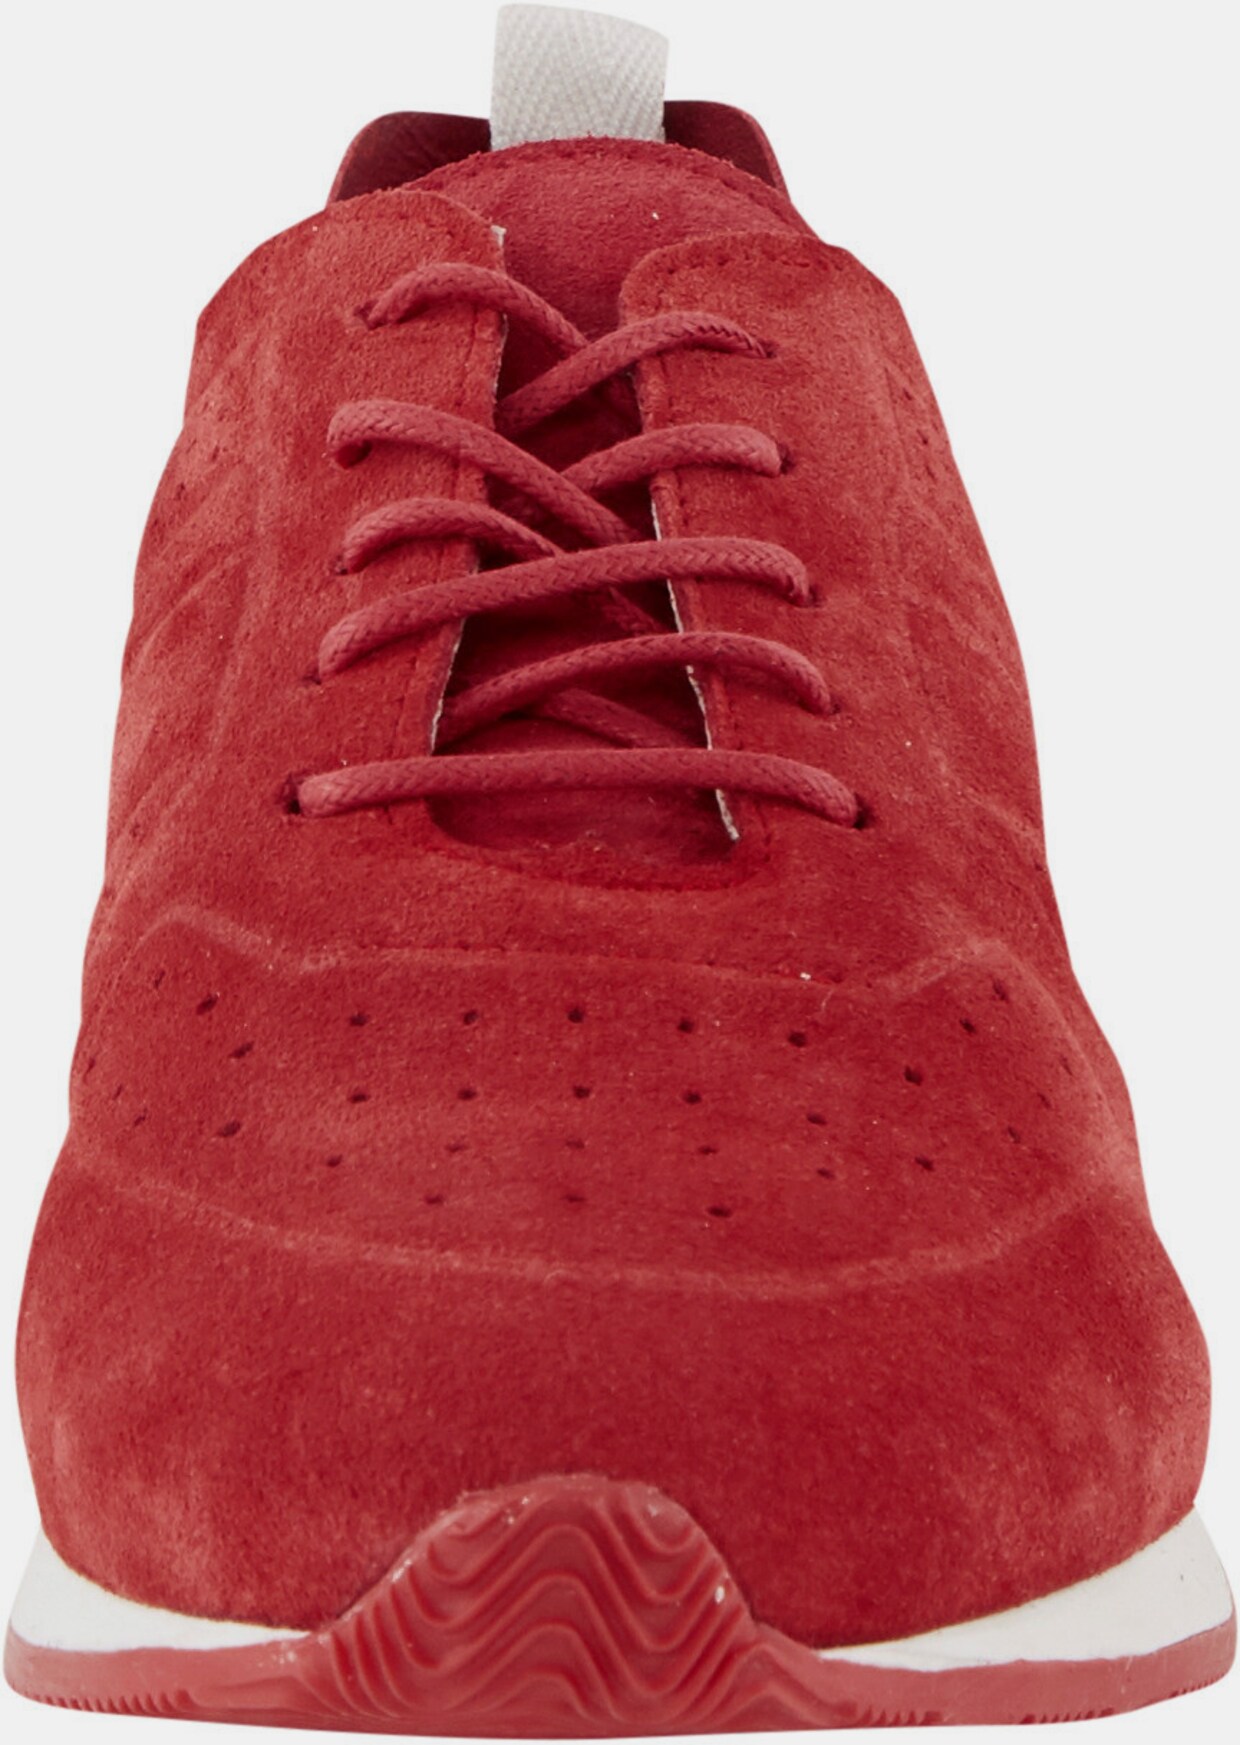 heine Chaussures à lacets - rouge